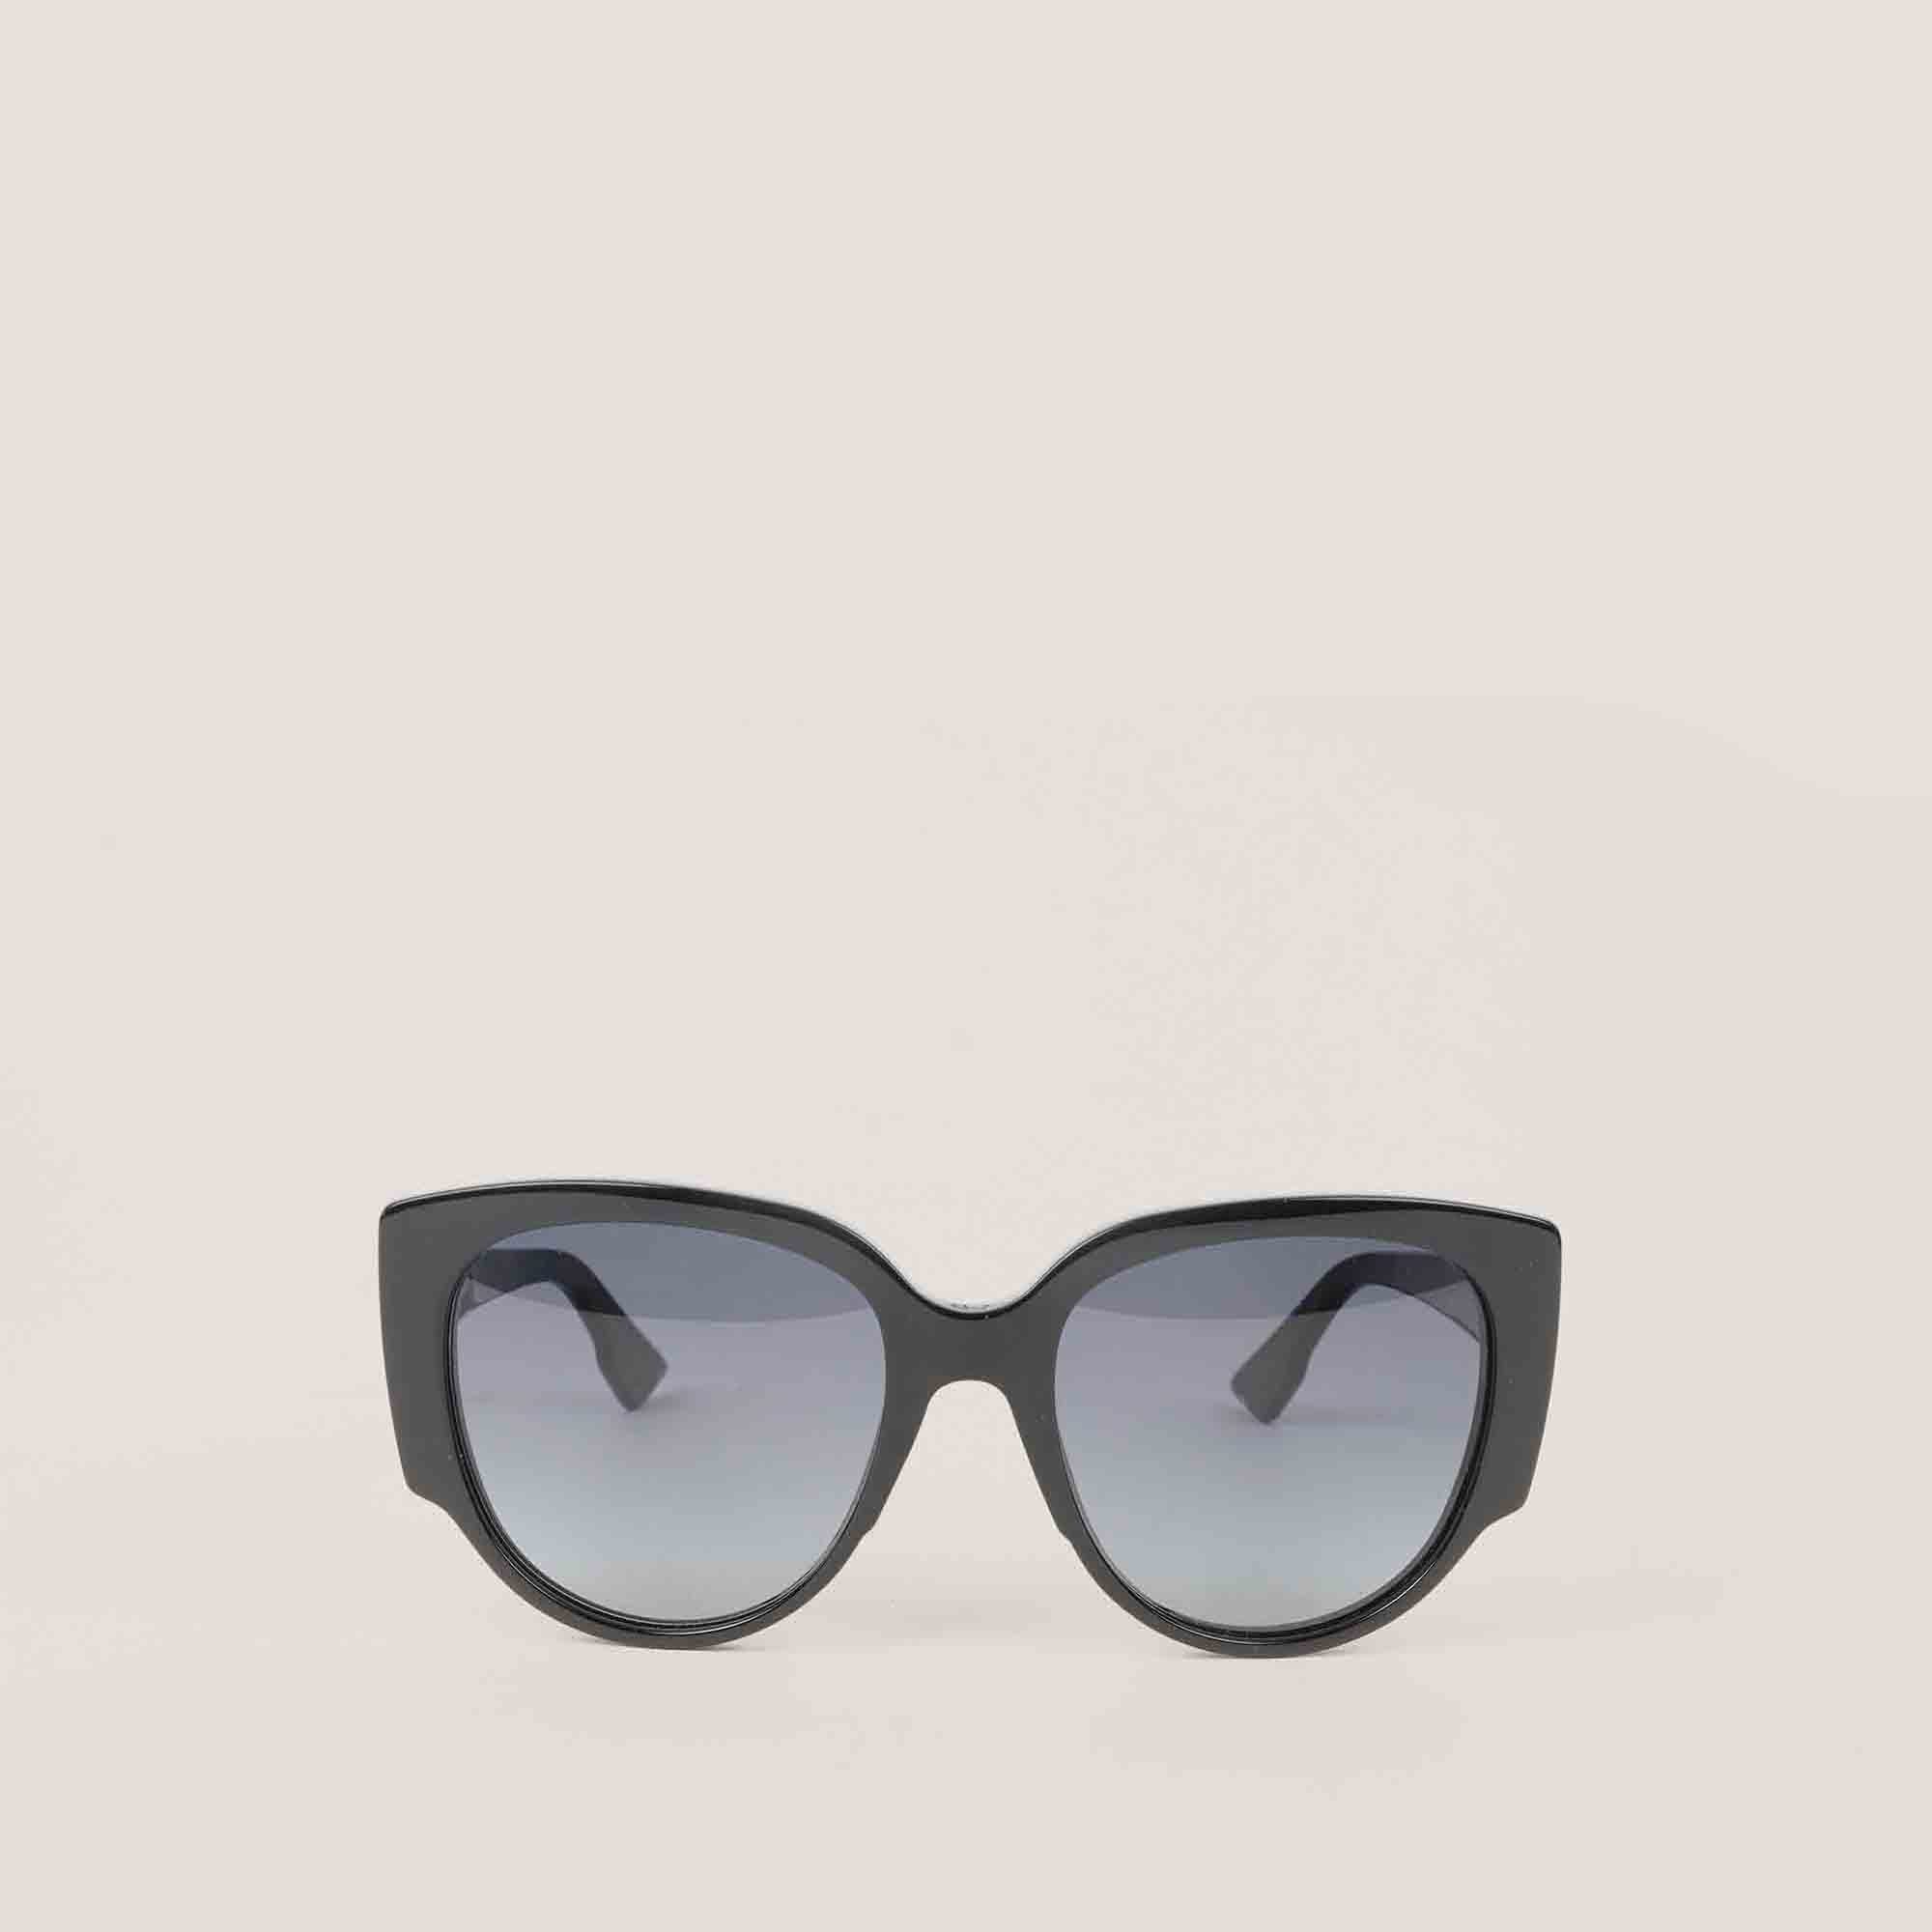 Diornight 1 Sunglasses - CHRISTIAN DIOR - Affordable Luxury